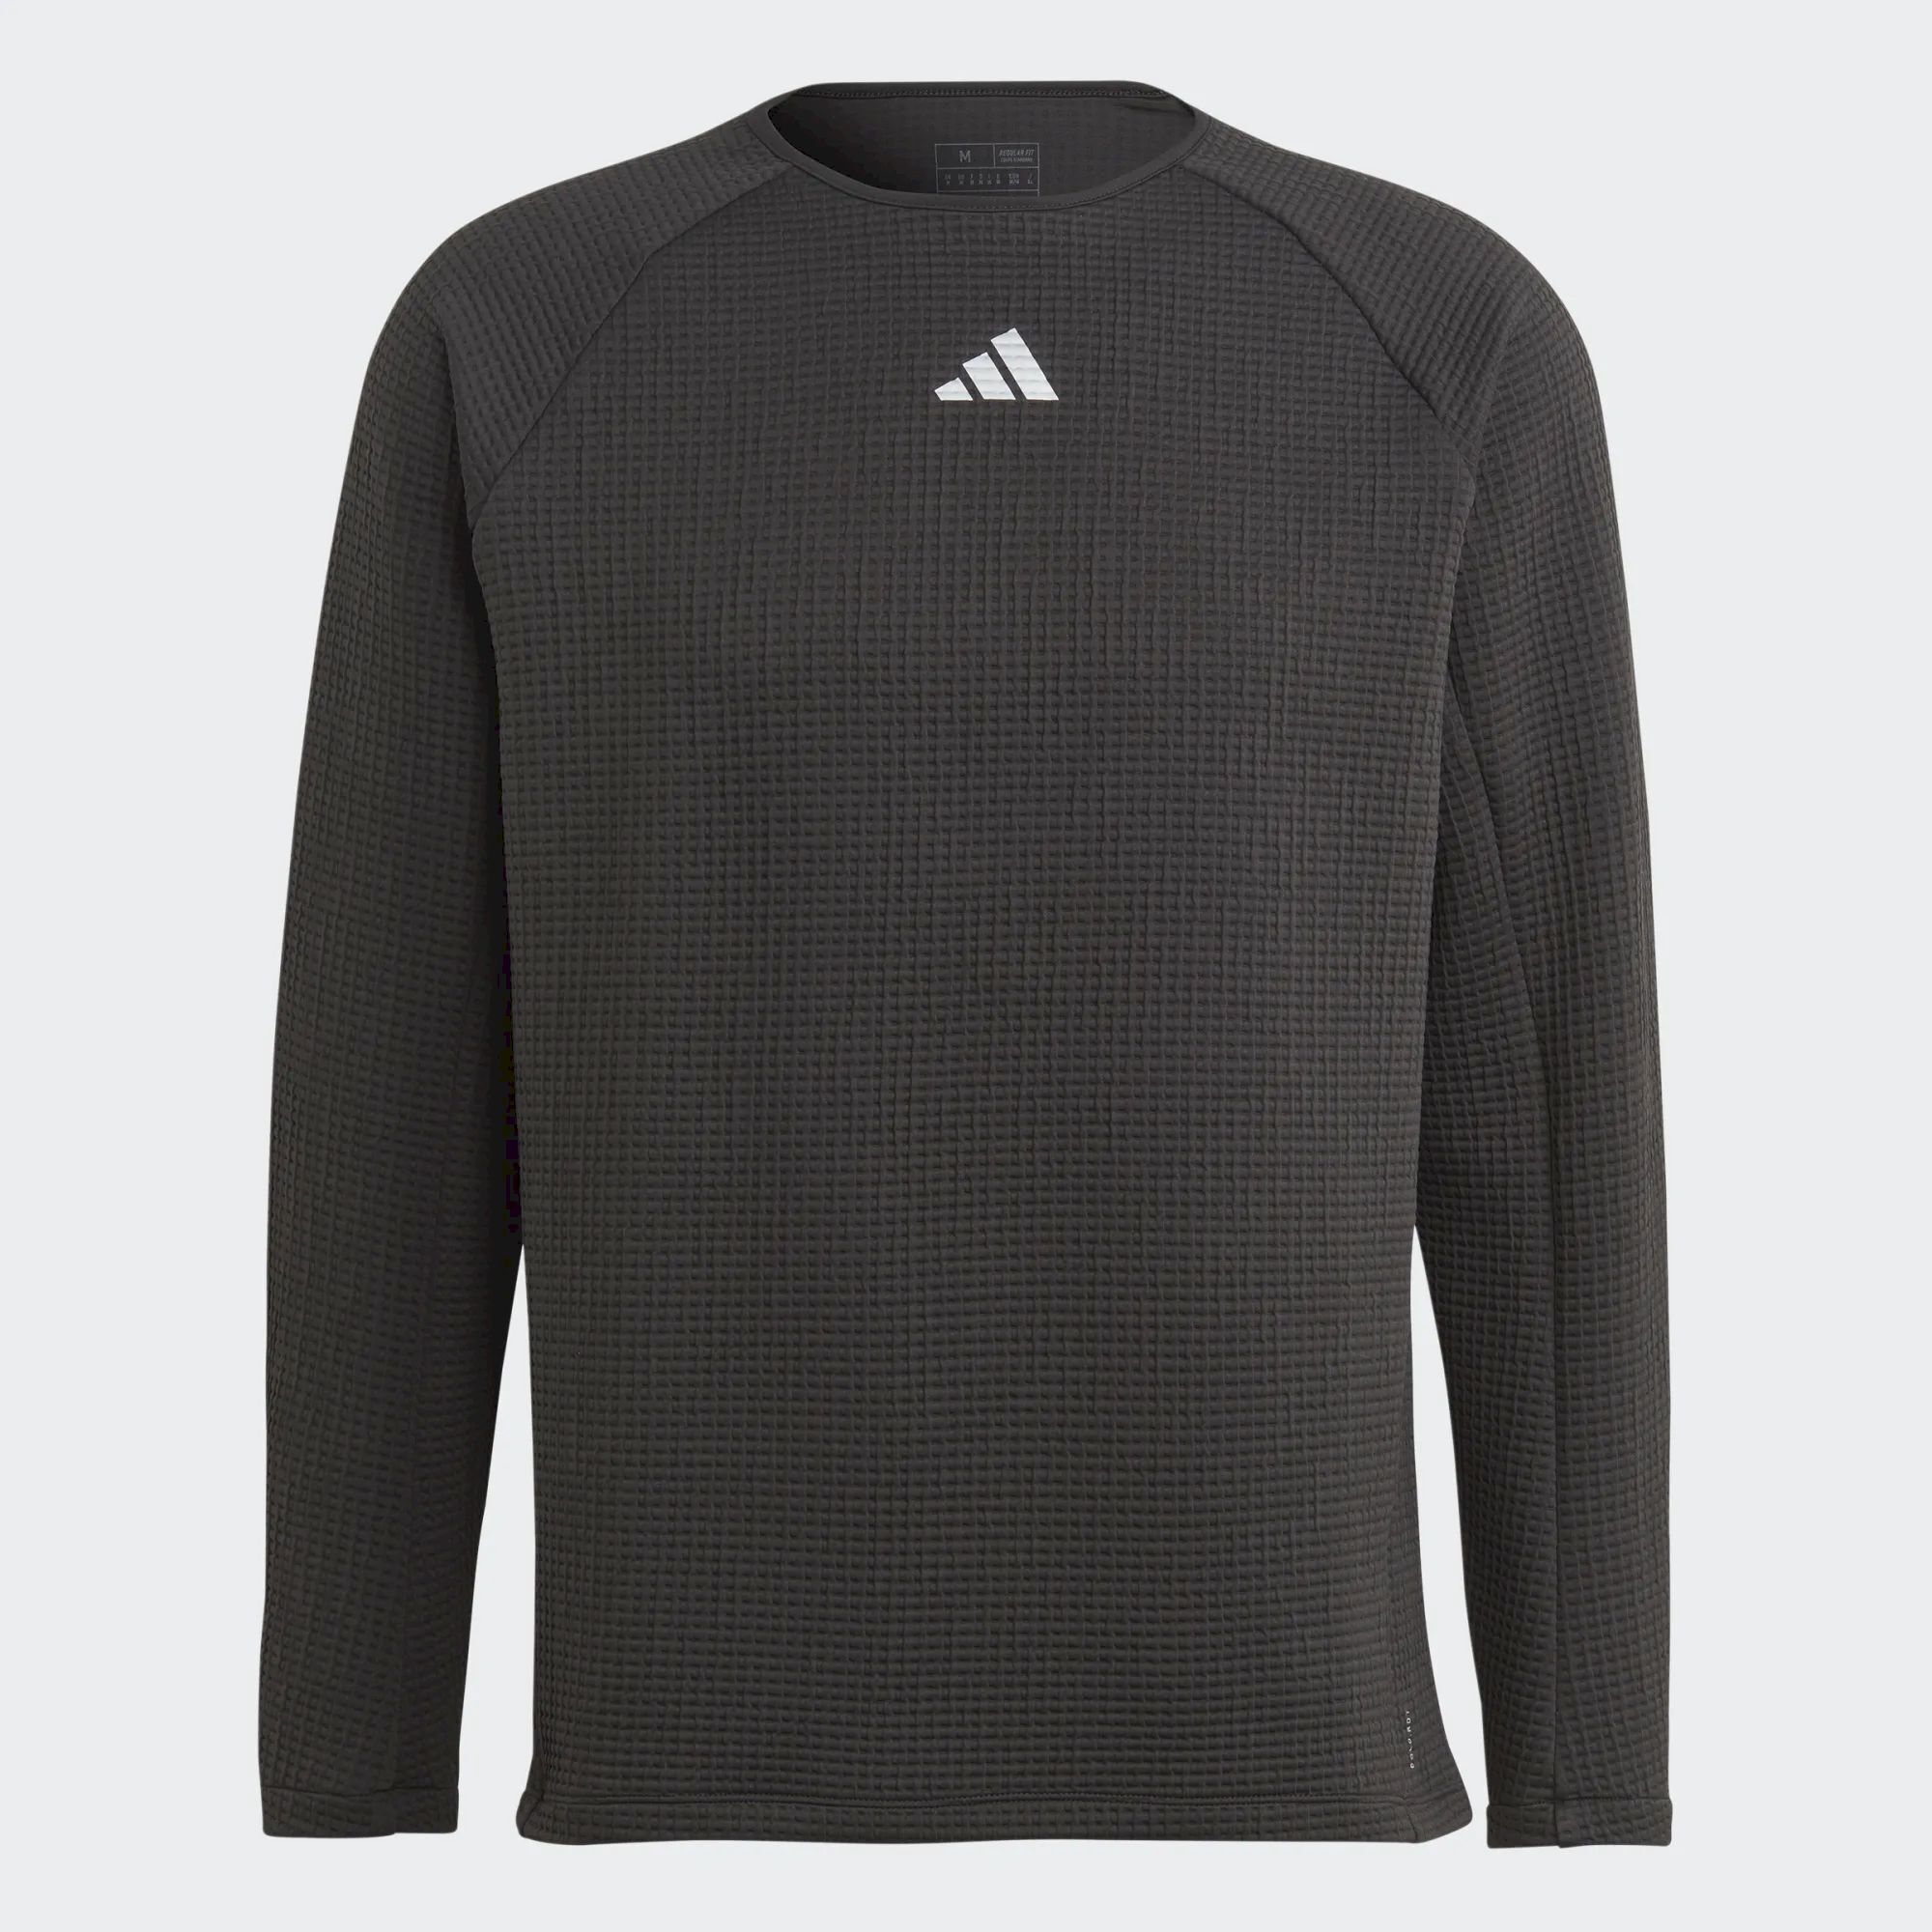 Adidas Ultimate CTE Warm LS - Base layer - Men's | Hardloop